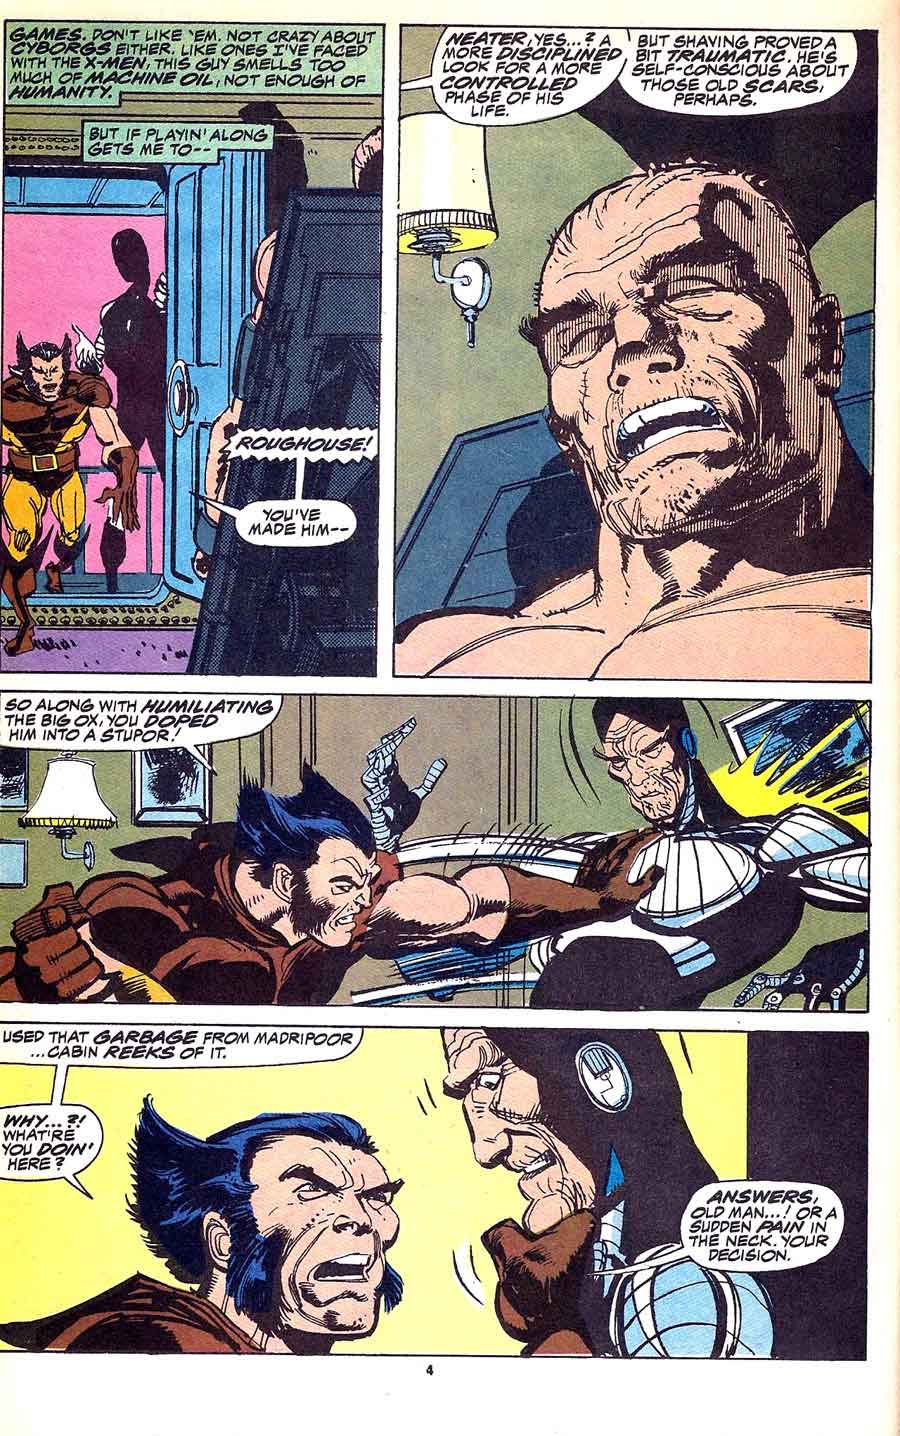 Wolverine v2 #18 marvel 1980s comic book page art by John Byrne